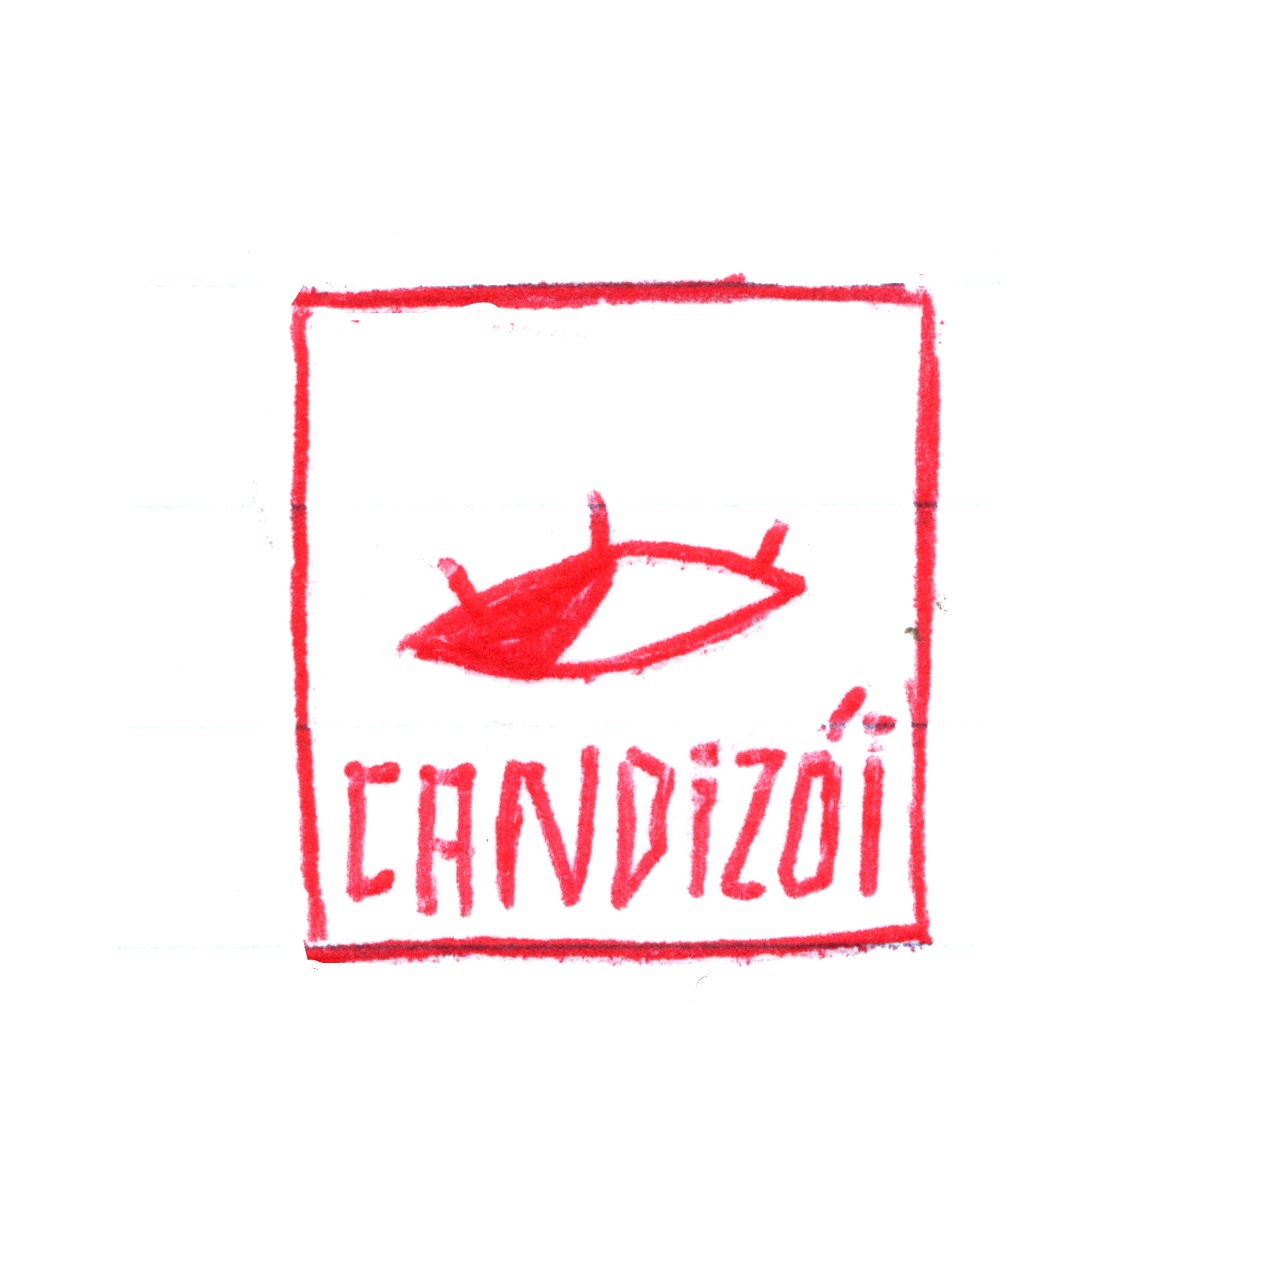 Candizoi Editorial